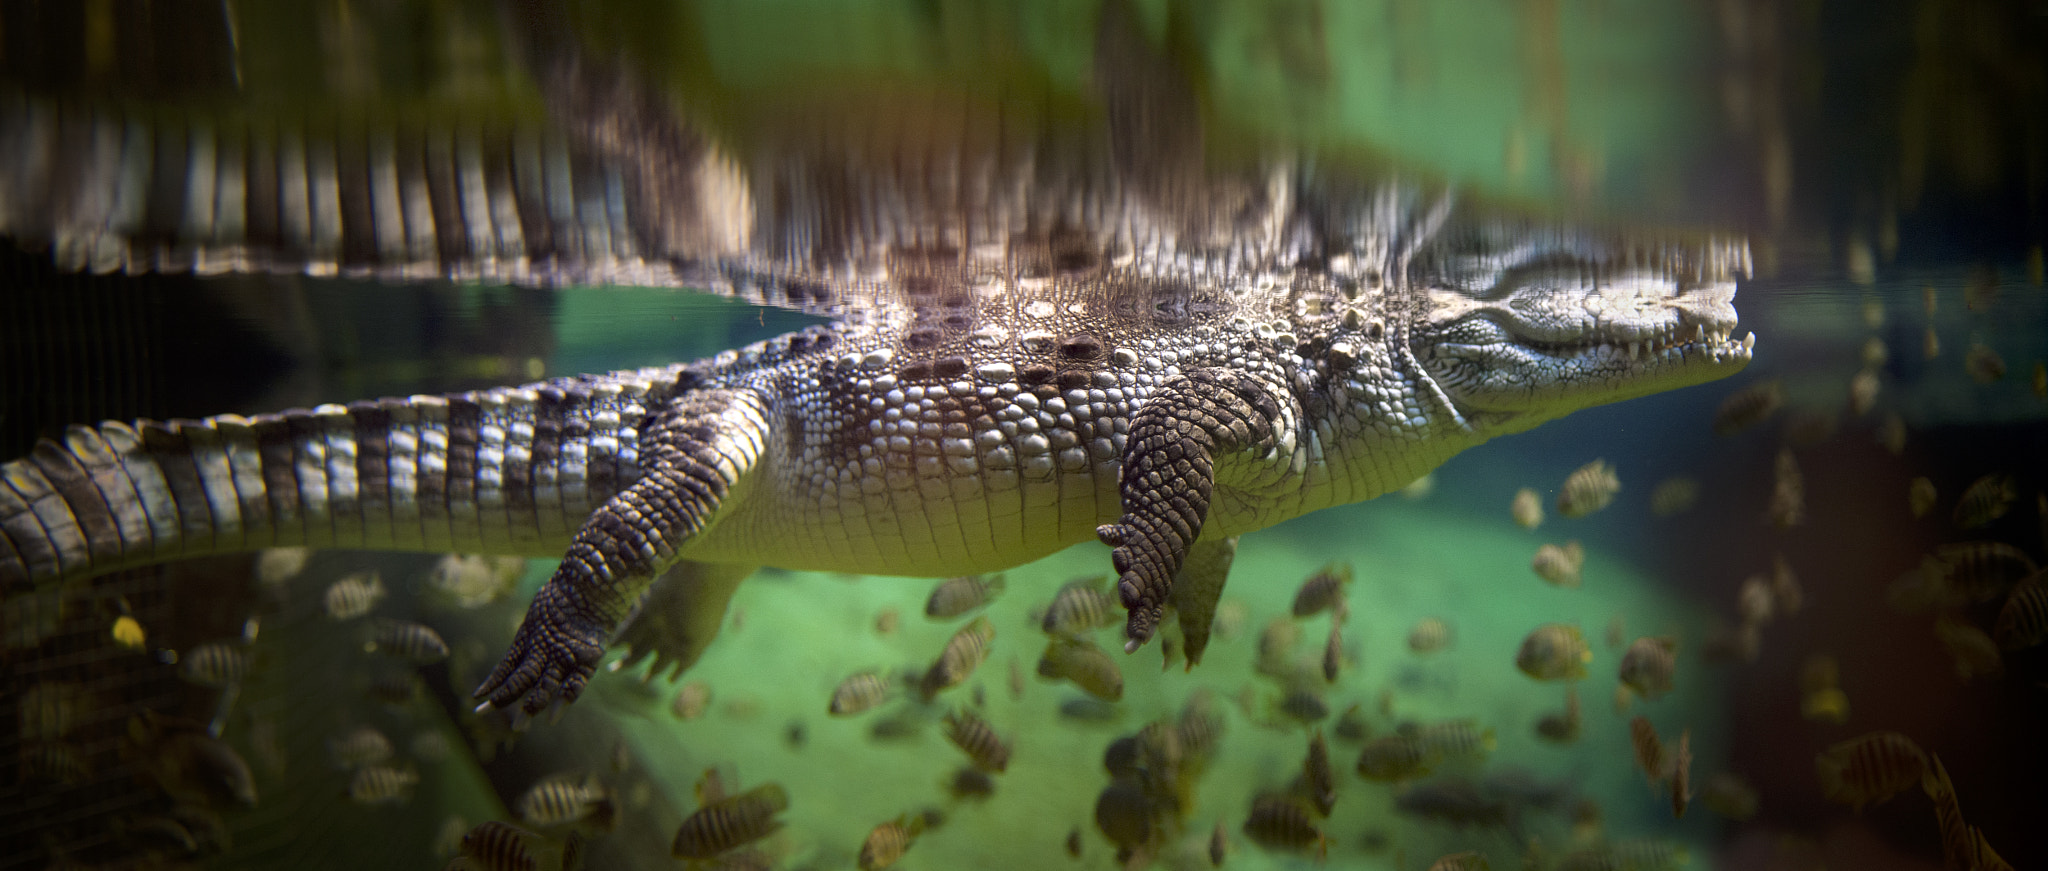 General 2048x871 underwater alligators animals fish crocodiles